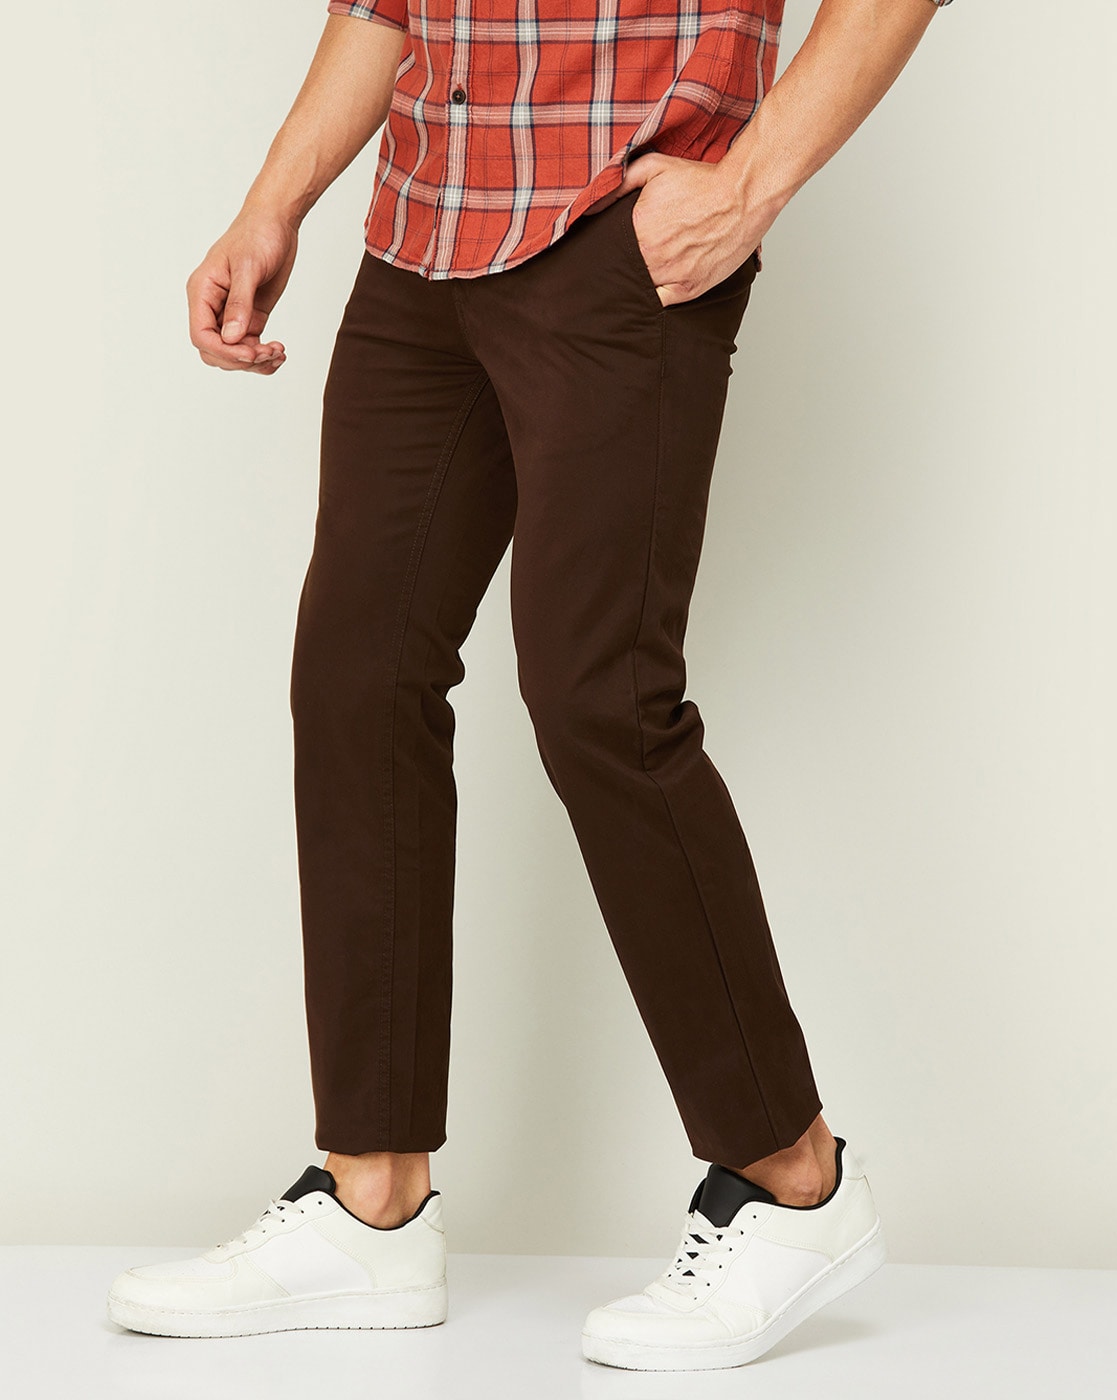 Men's Brown Dress Pants - Men''s Slacks - Express